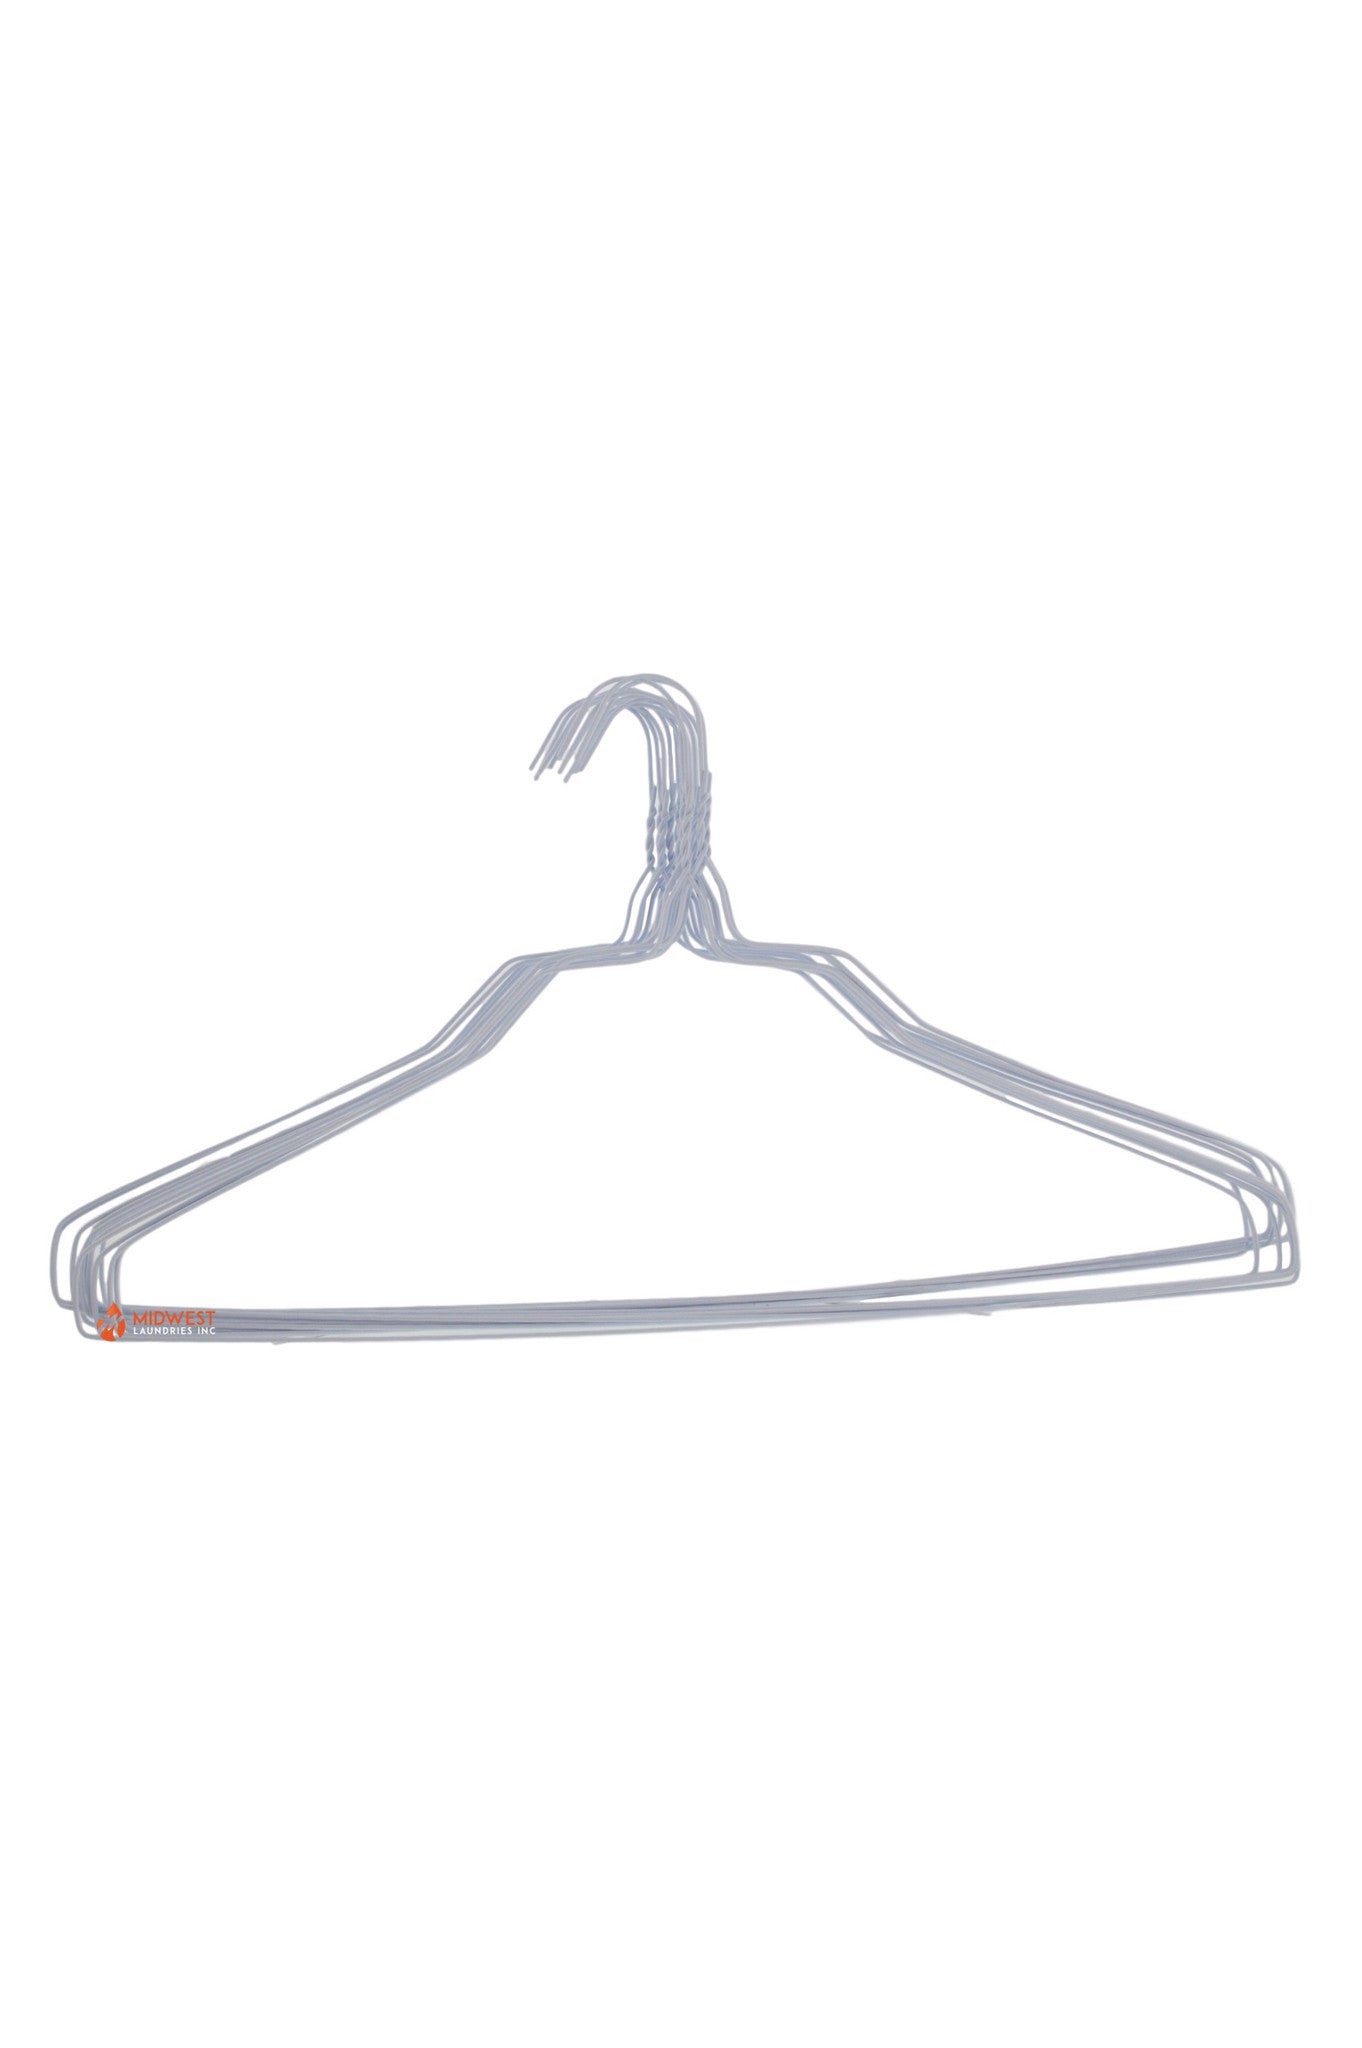 Wire Shirt Hangers - 18, White